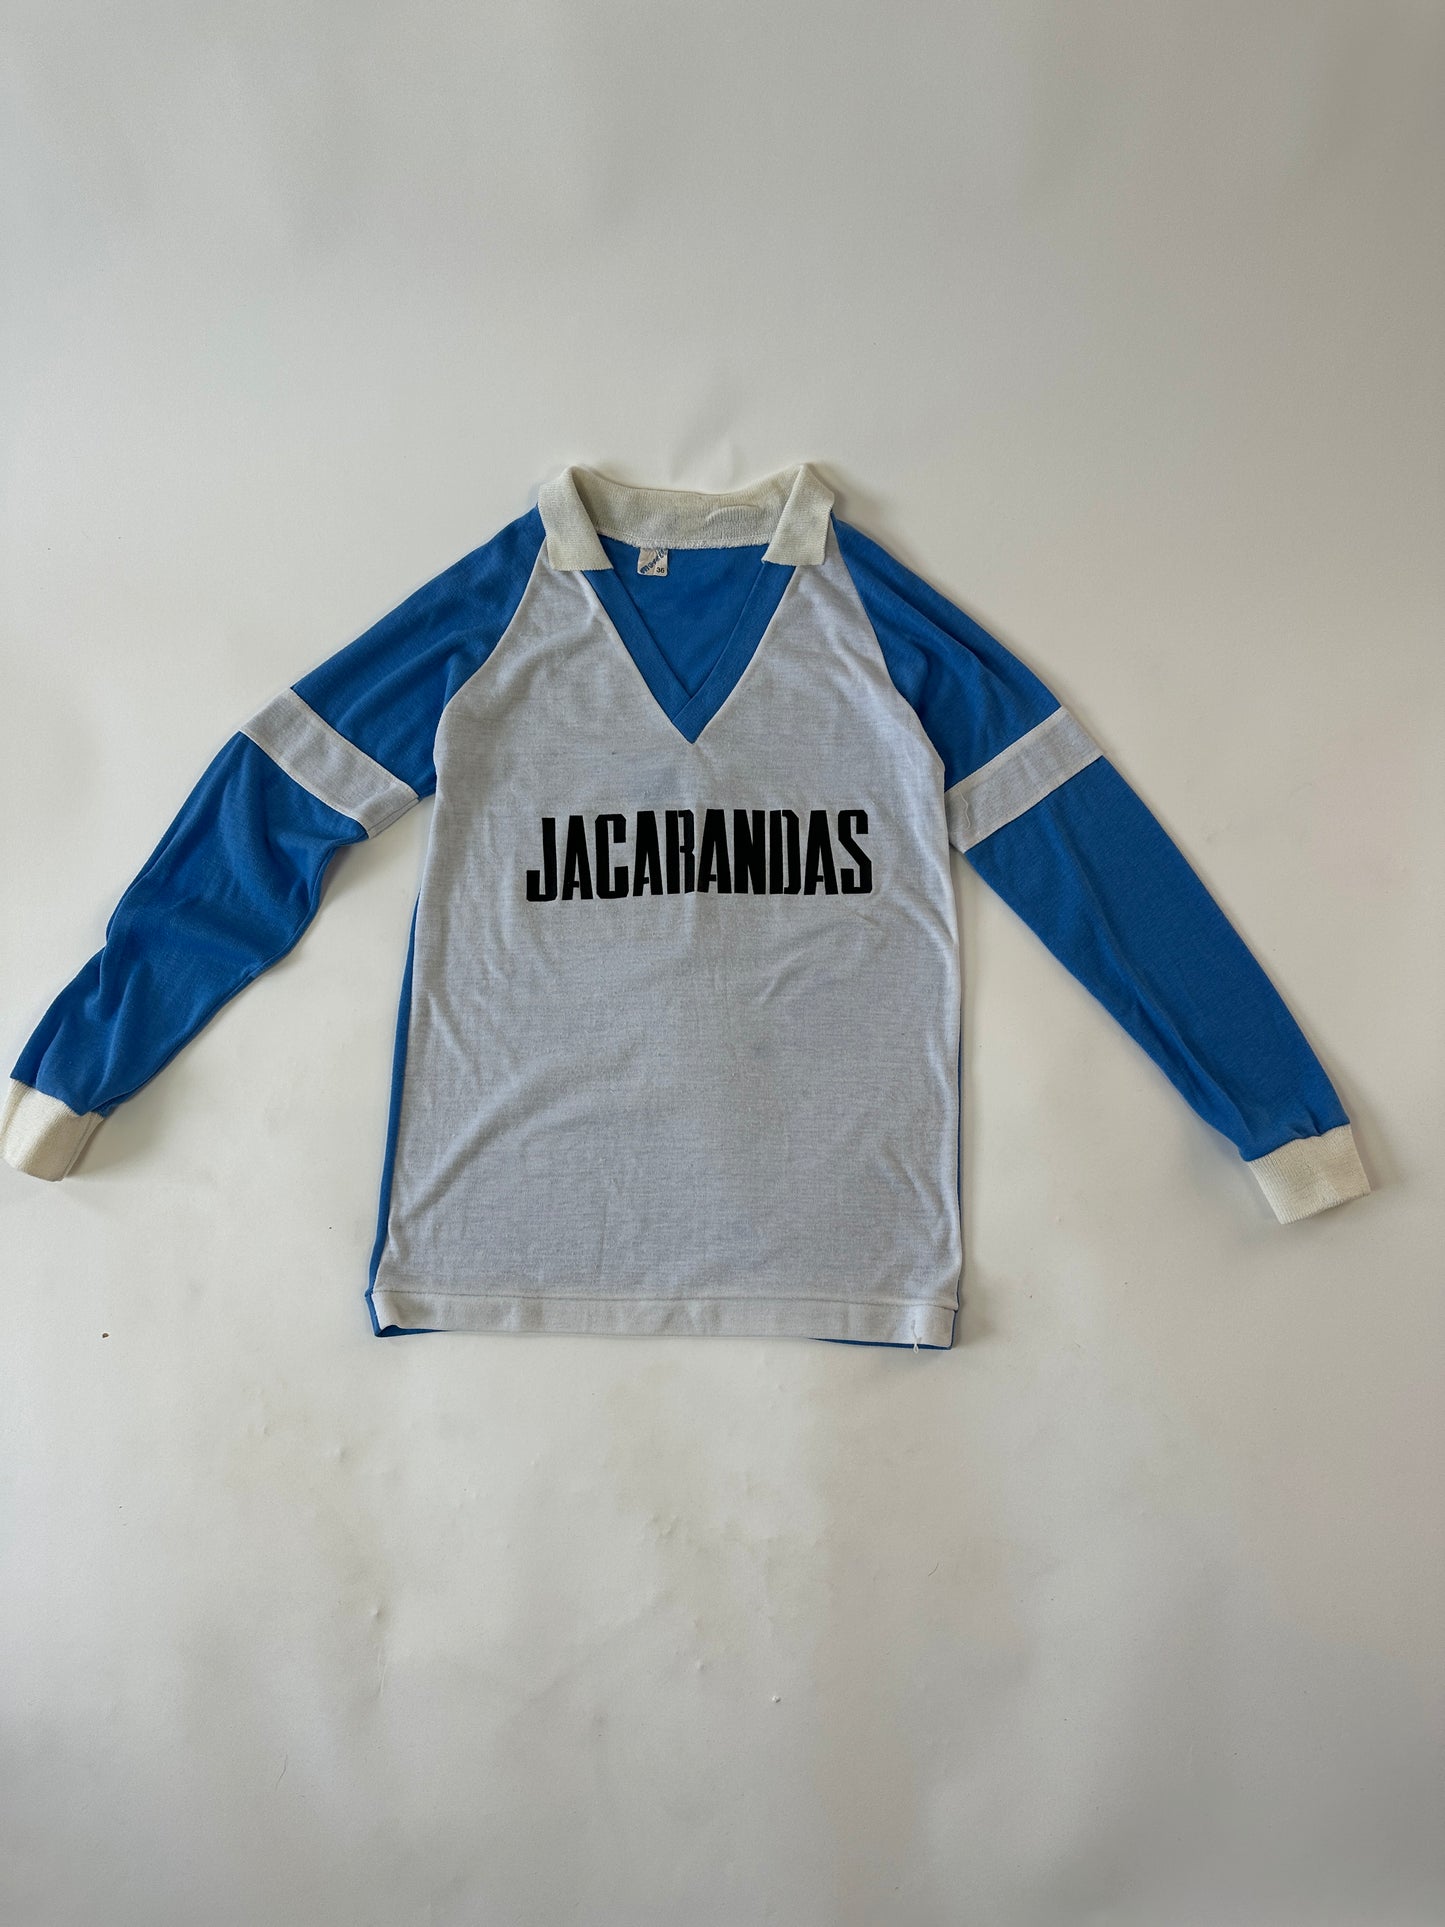 Jersey 80's Jacarandas #22 Vintage - S